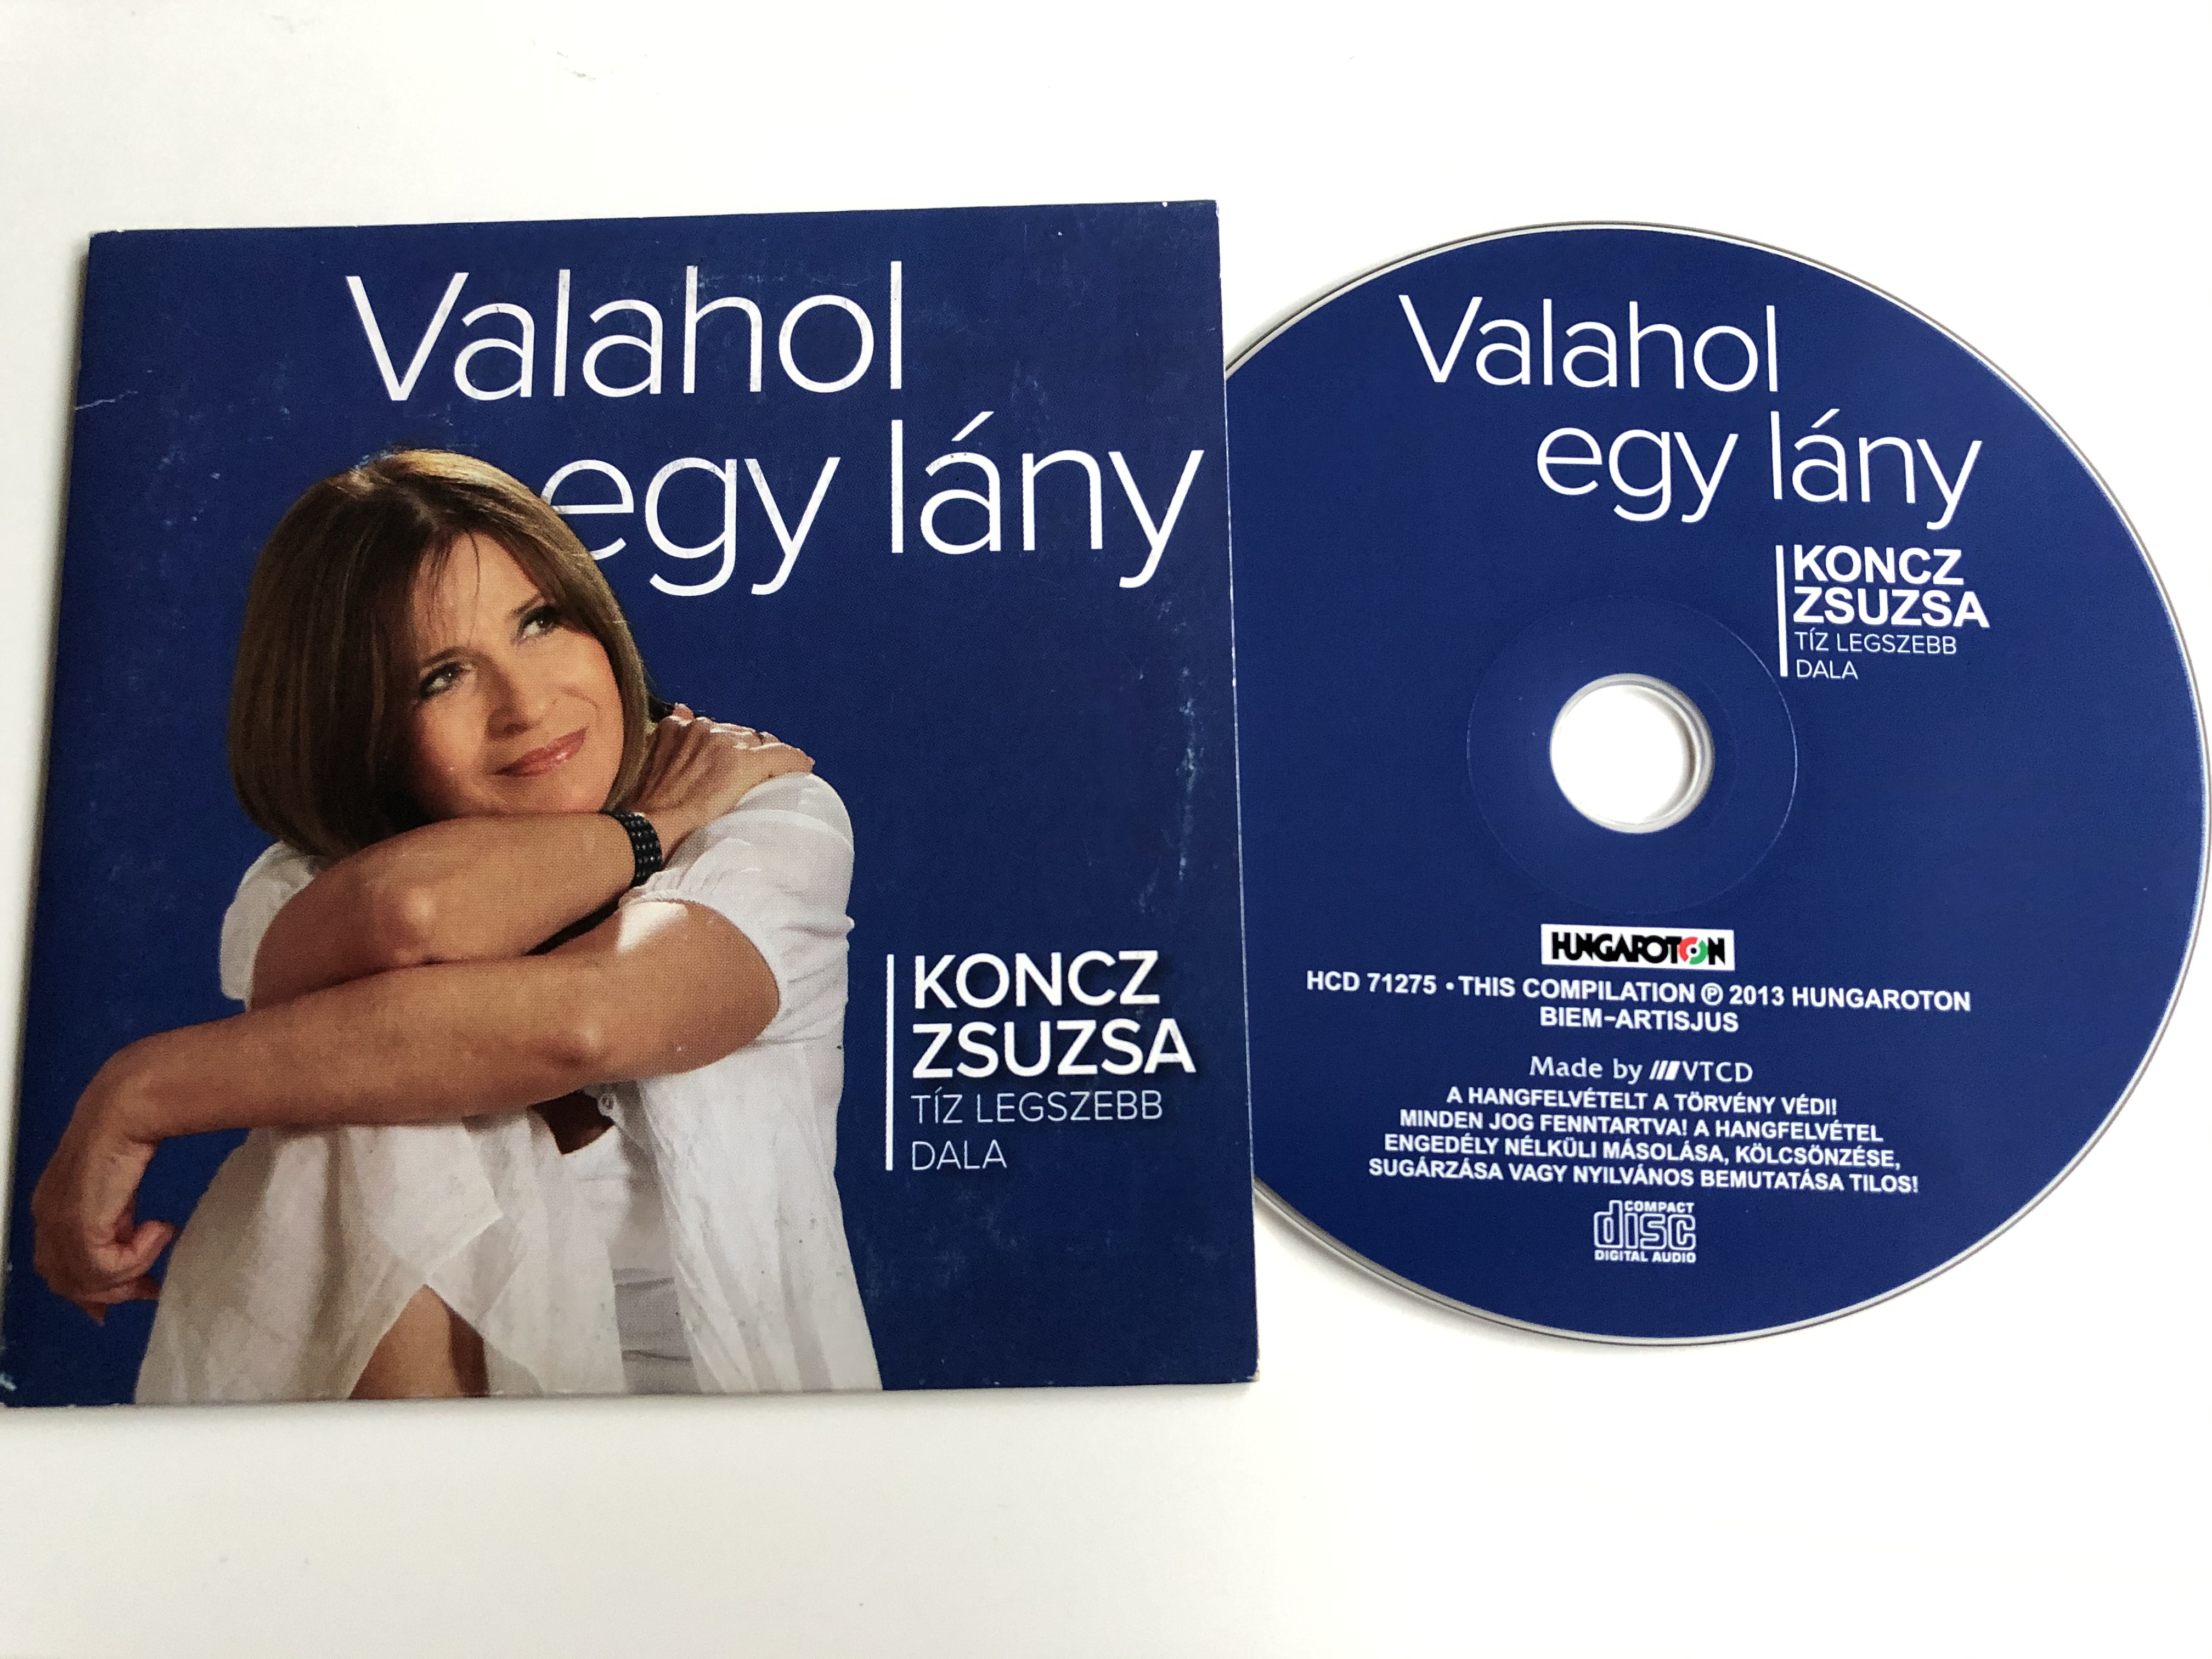 valahol-egy-l-ny-koncz-zsuzsa-hungaroton-audio-cd-2013-hcd-71275-2-.jpg